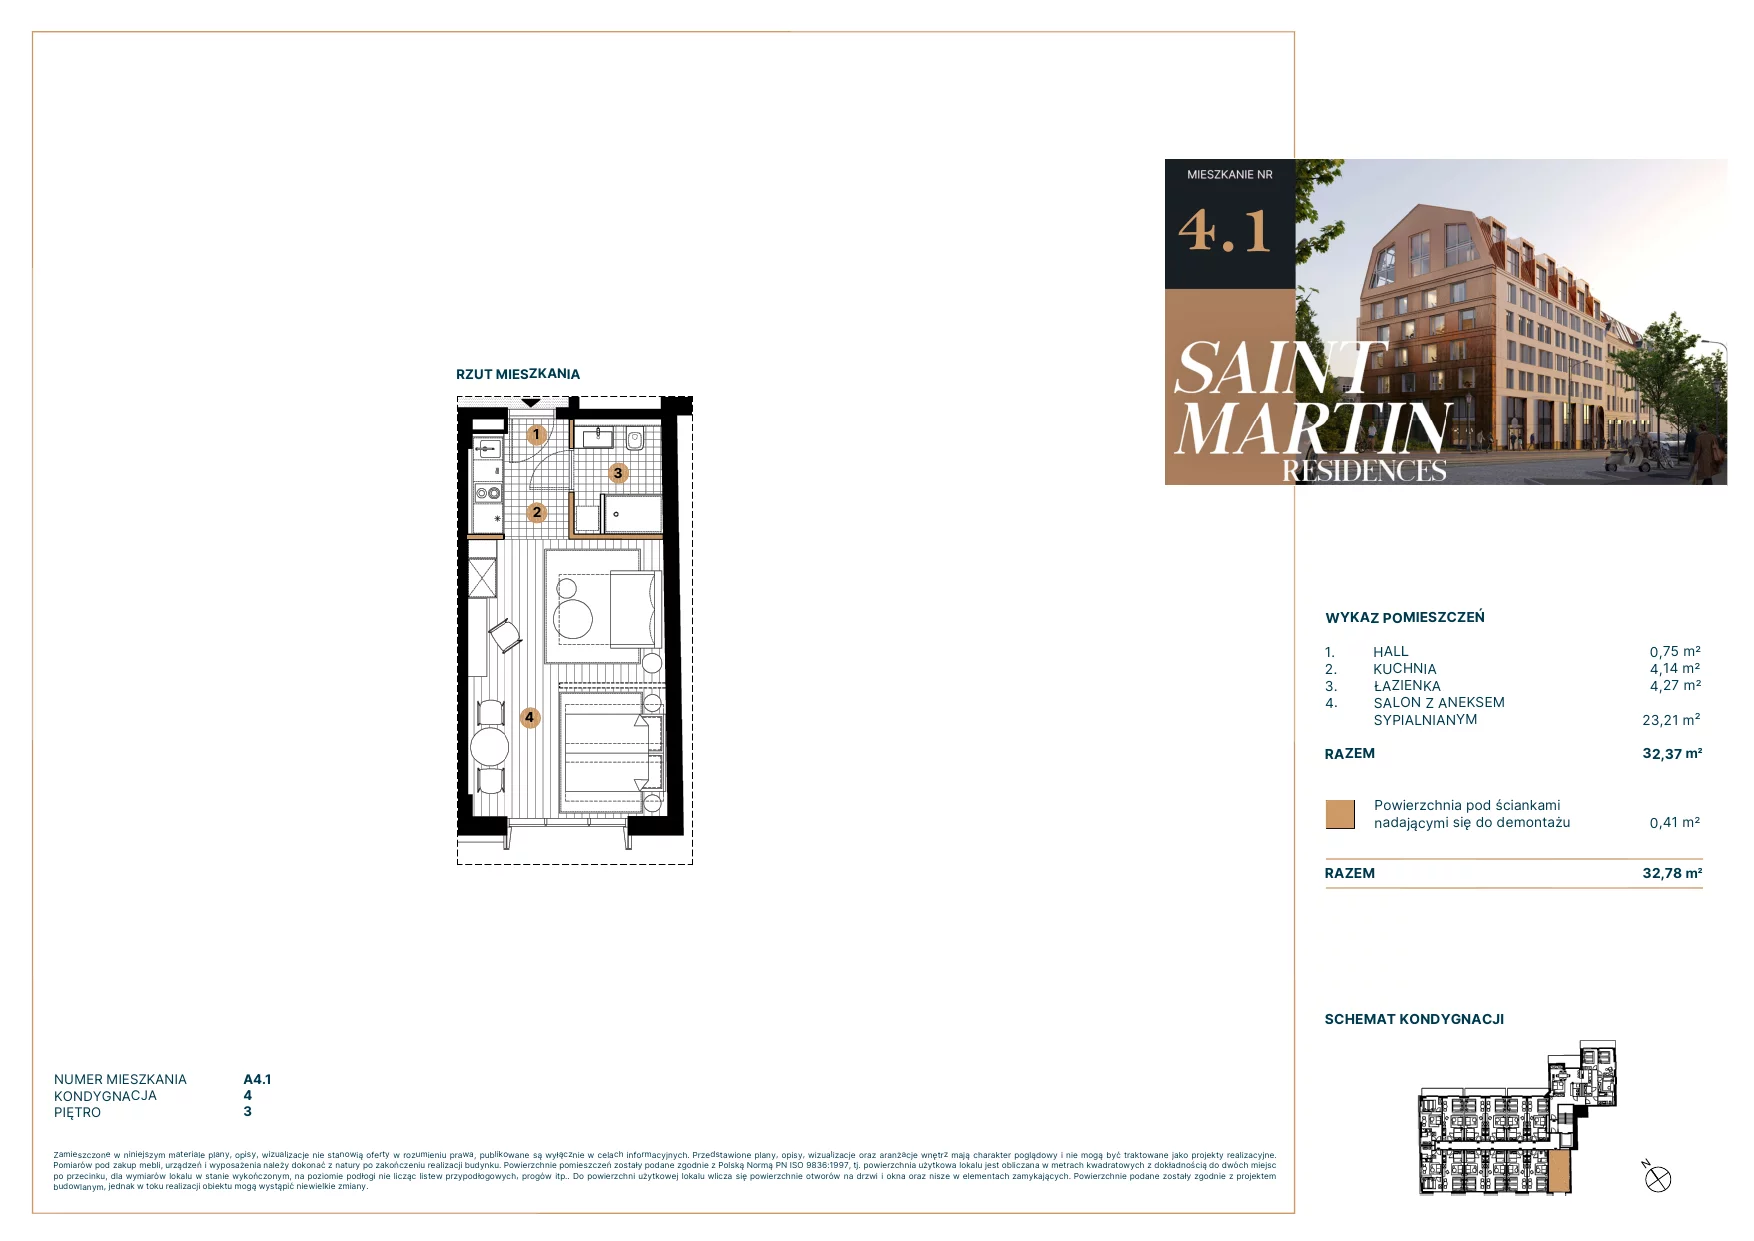 Apartament 32,78 m², piętro 3, oferta nr A4.1, Saint Martin Residences II, Poznań, Stare Miasto, Stare Miasto, ul. Podgórna 7